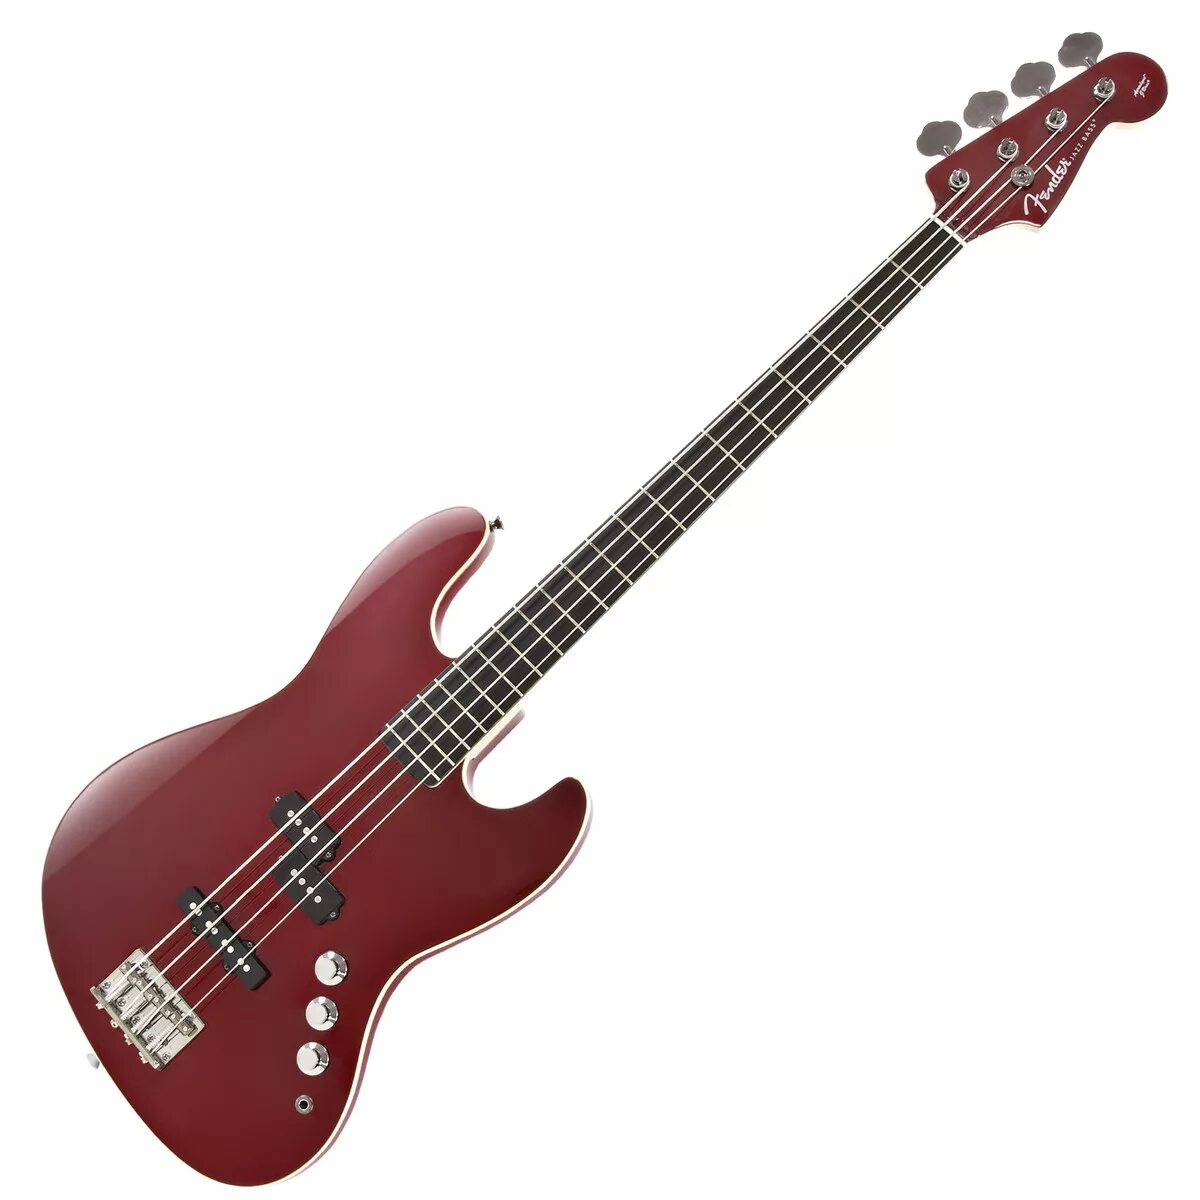 Red bass. Бас-гитара Fender Aerodyne Jazz Bass. Fender Jazz Bass Special PJ-555. Fender Japan Jazz Bass Candy Red. Бас гитара Фендер джаз бас спешл 555.